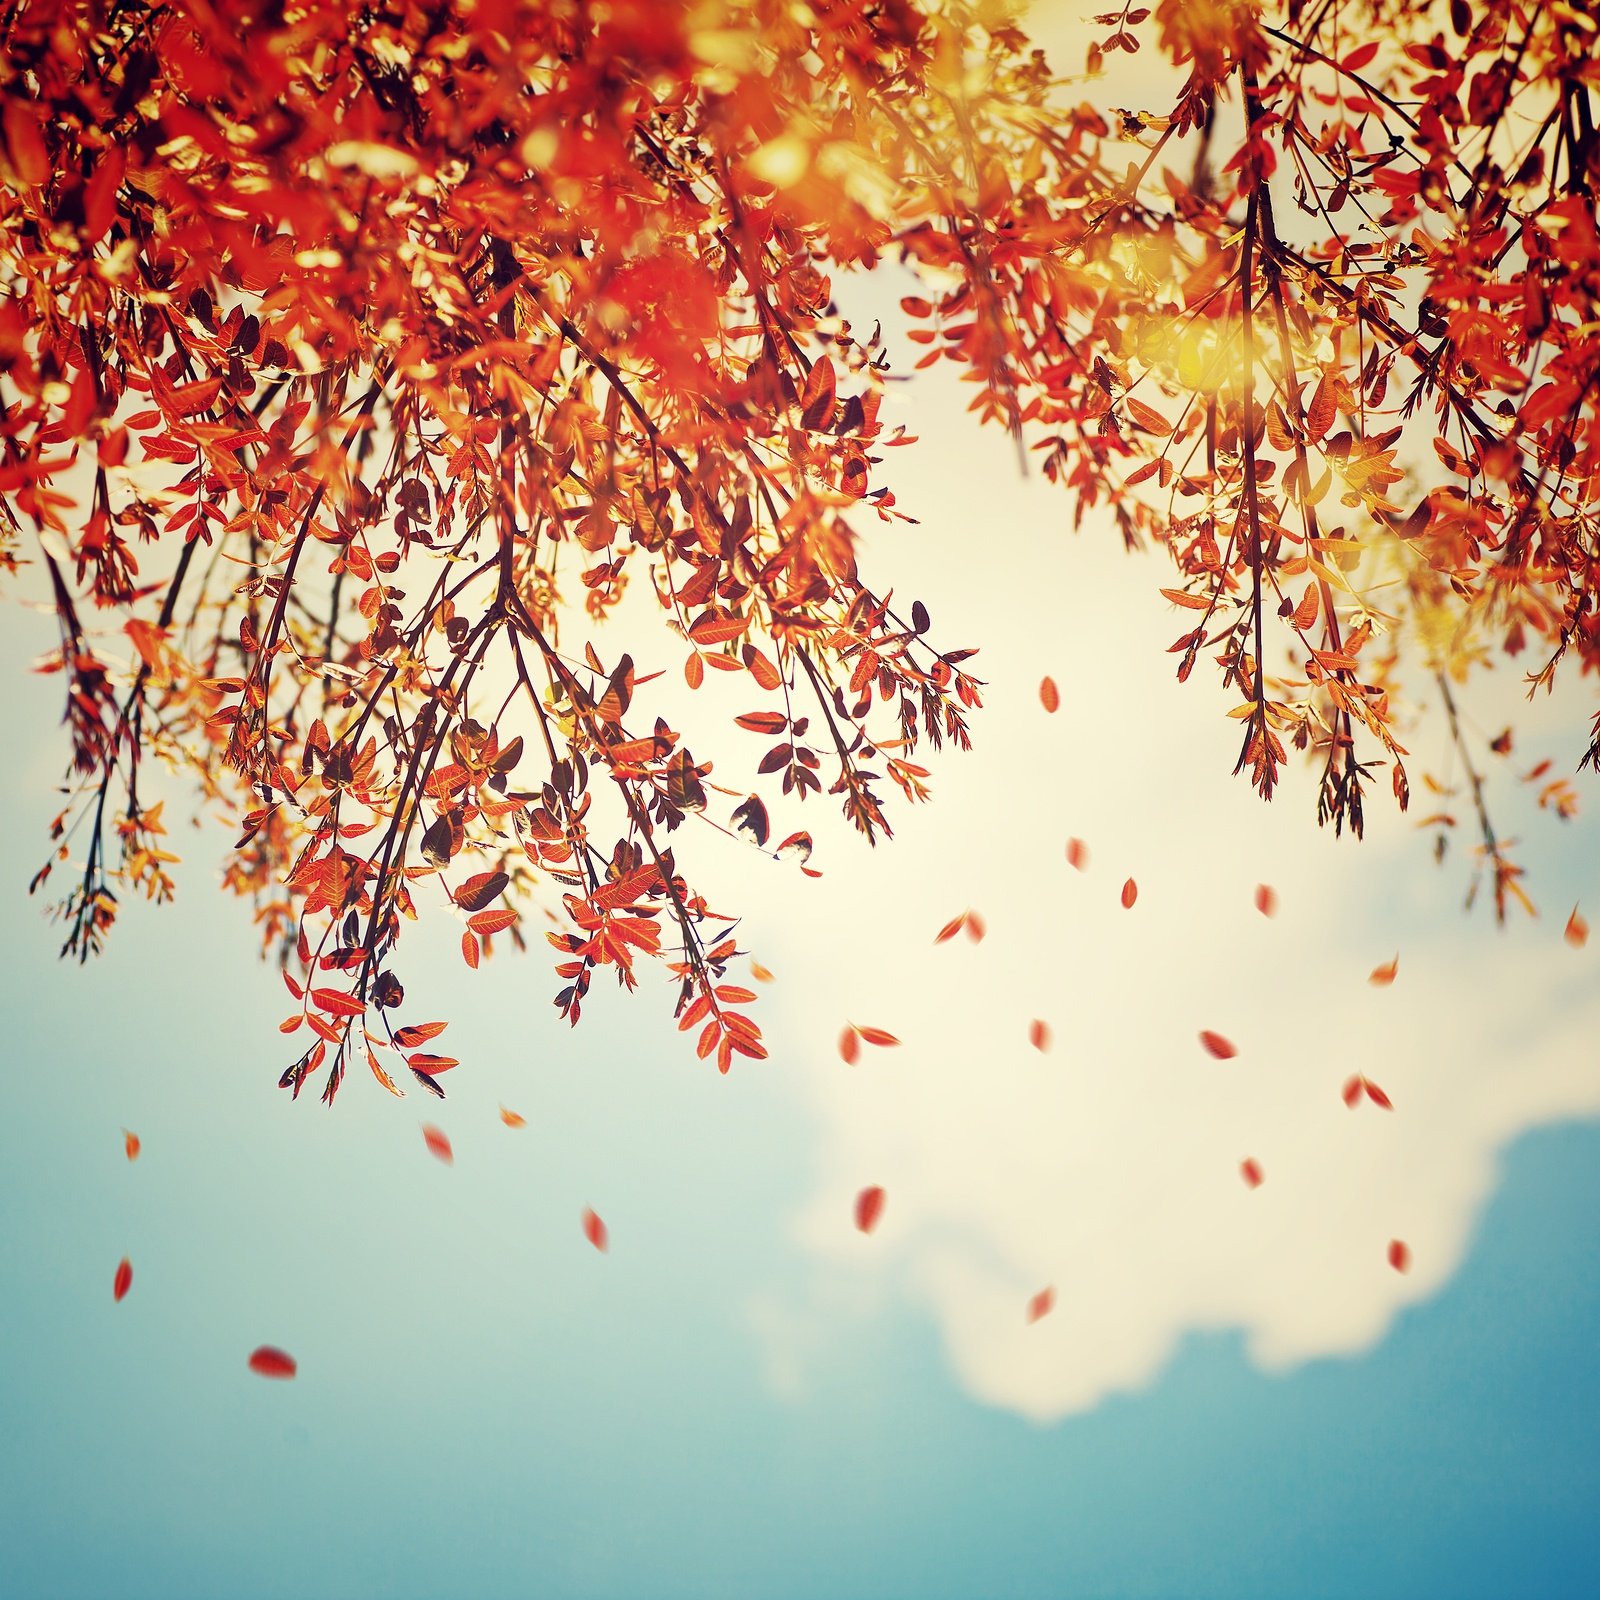 bigstock-Beautiful-vintage-autumn-backg-99509672.jpg